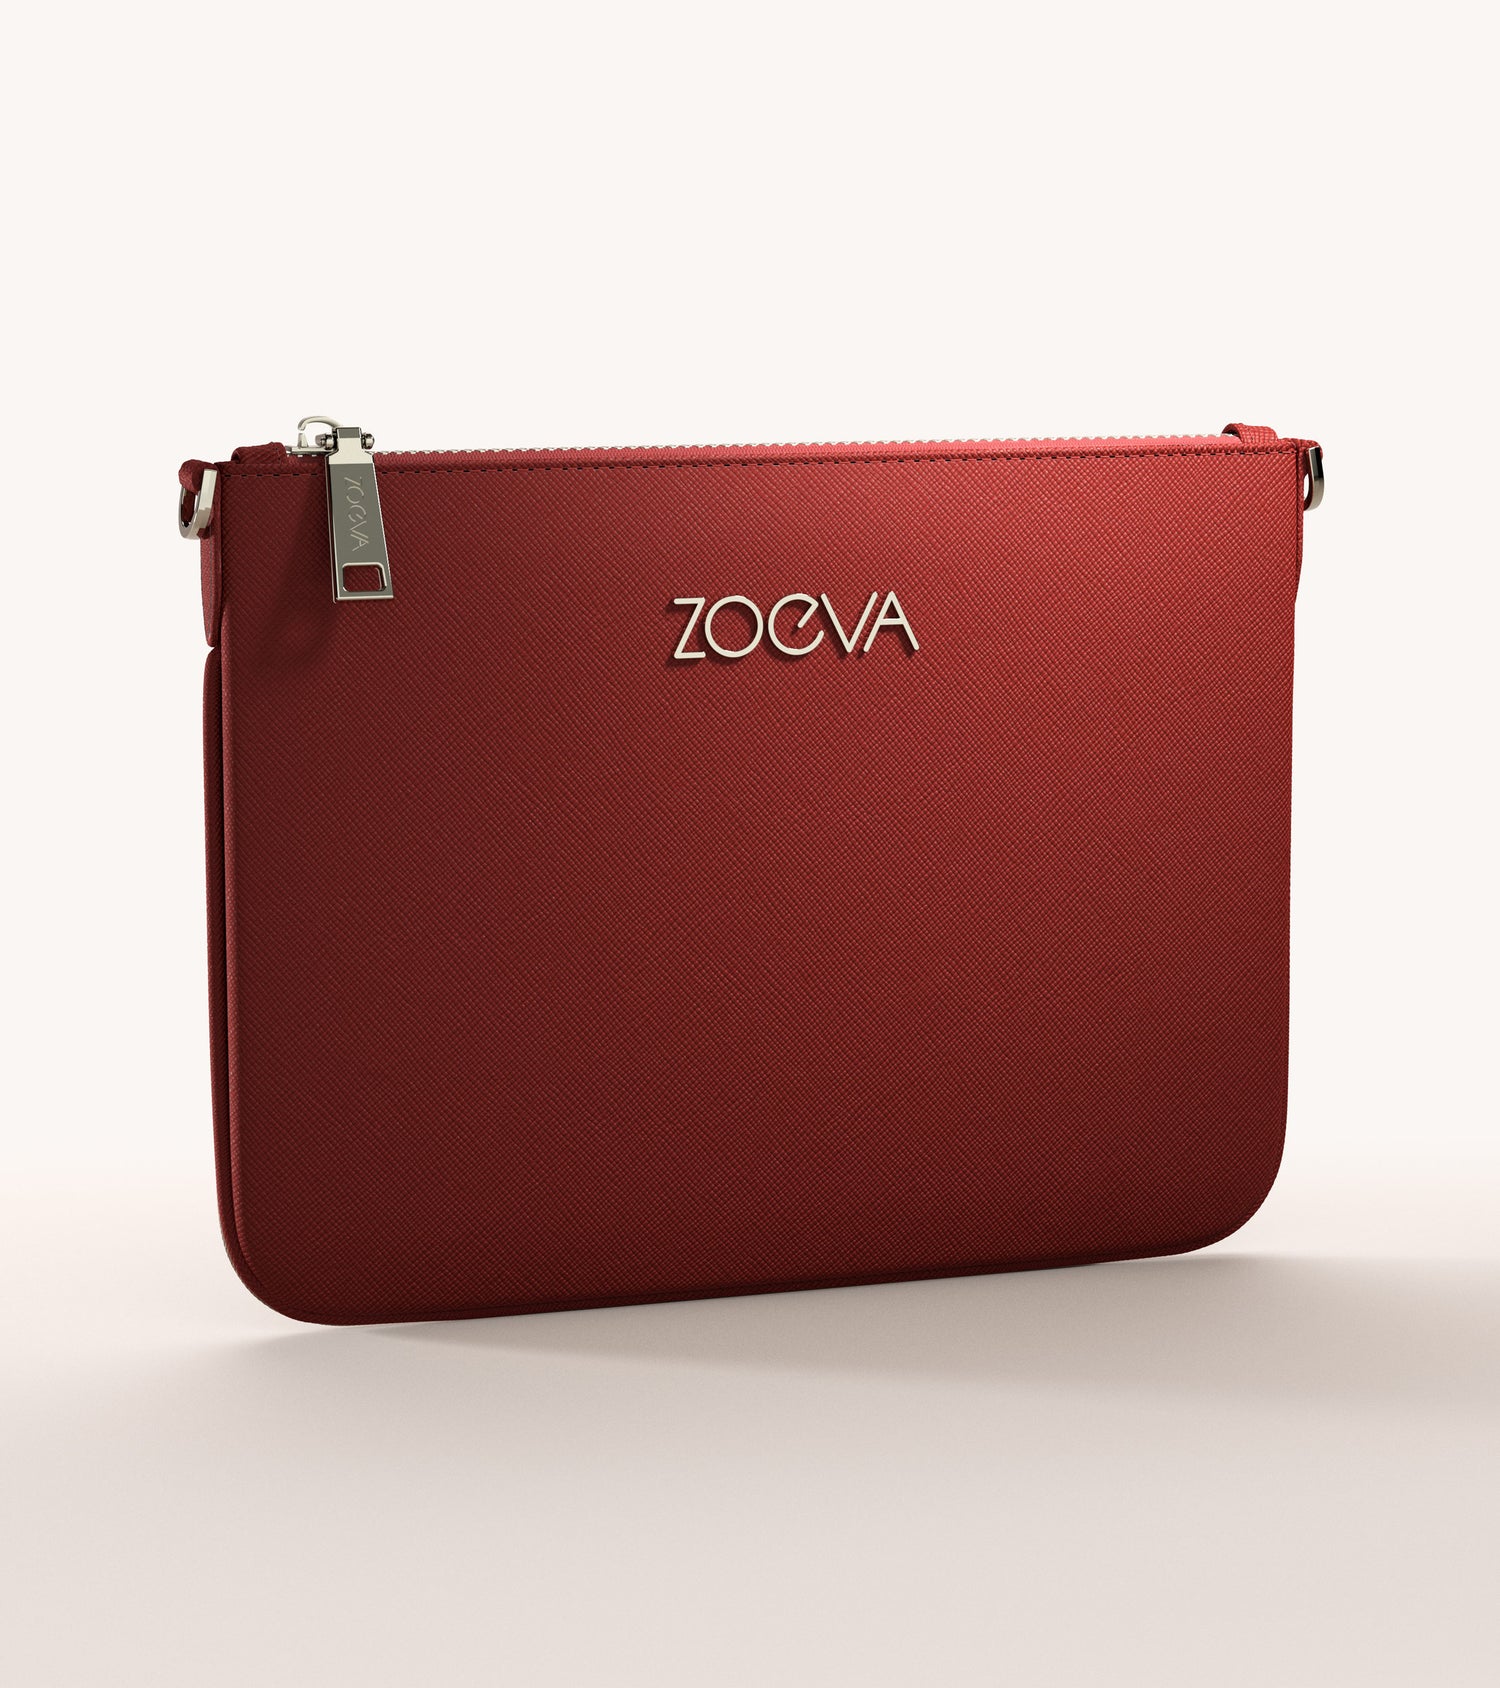 ZOEVA - The Complete Pinselset & Shoulder Strap (CHERRY) - BRUSH SET